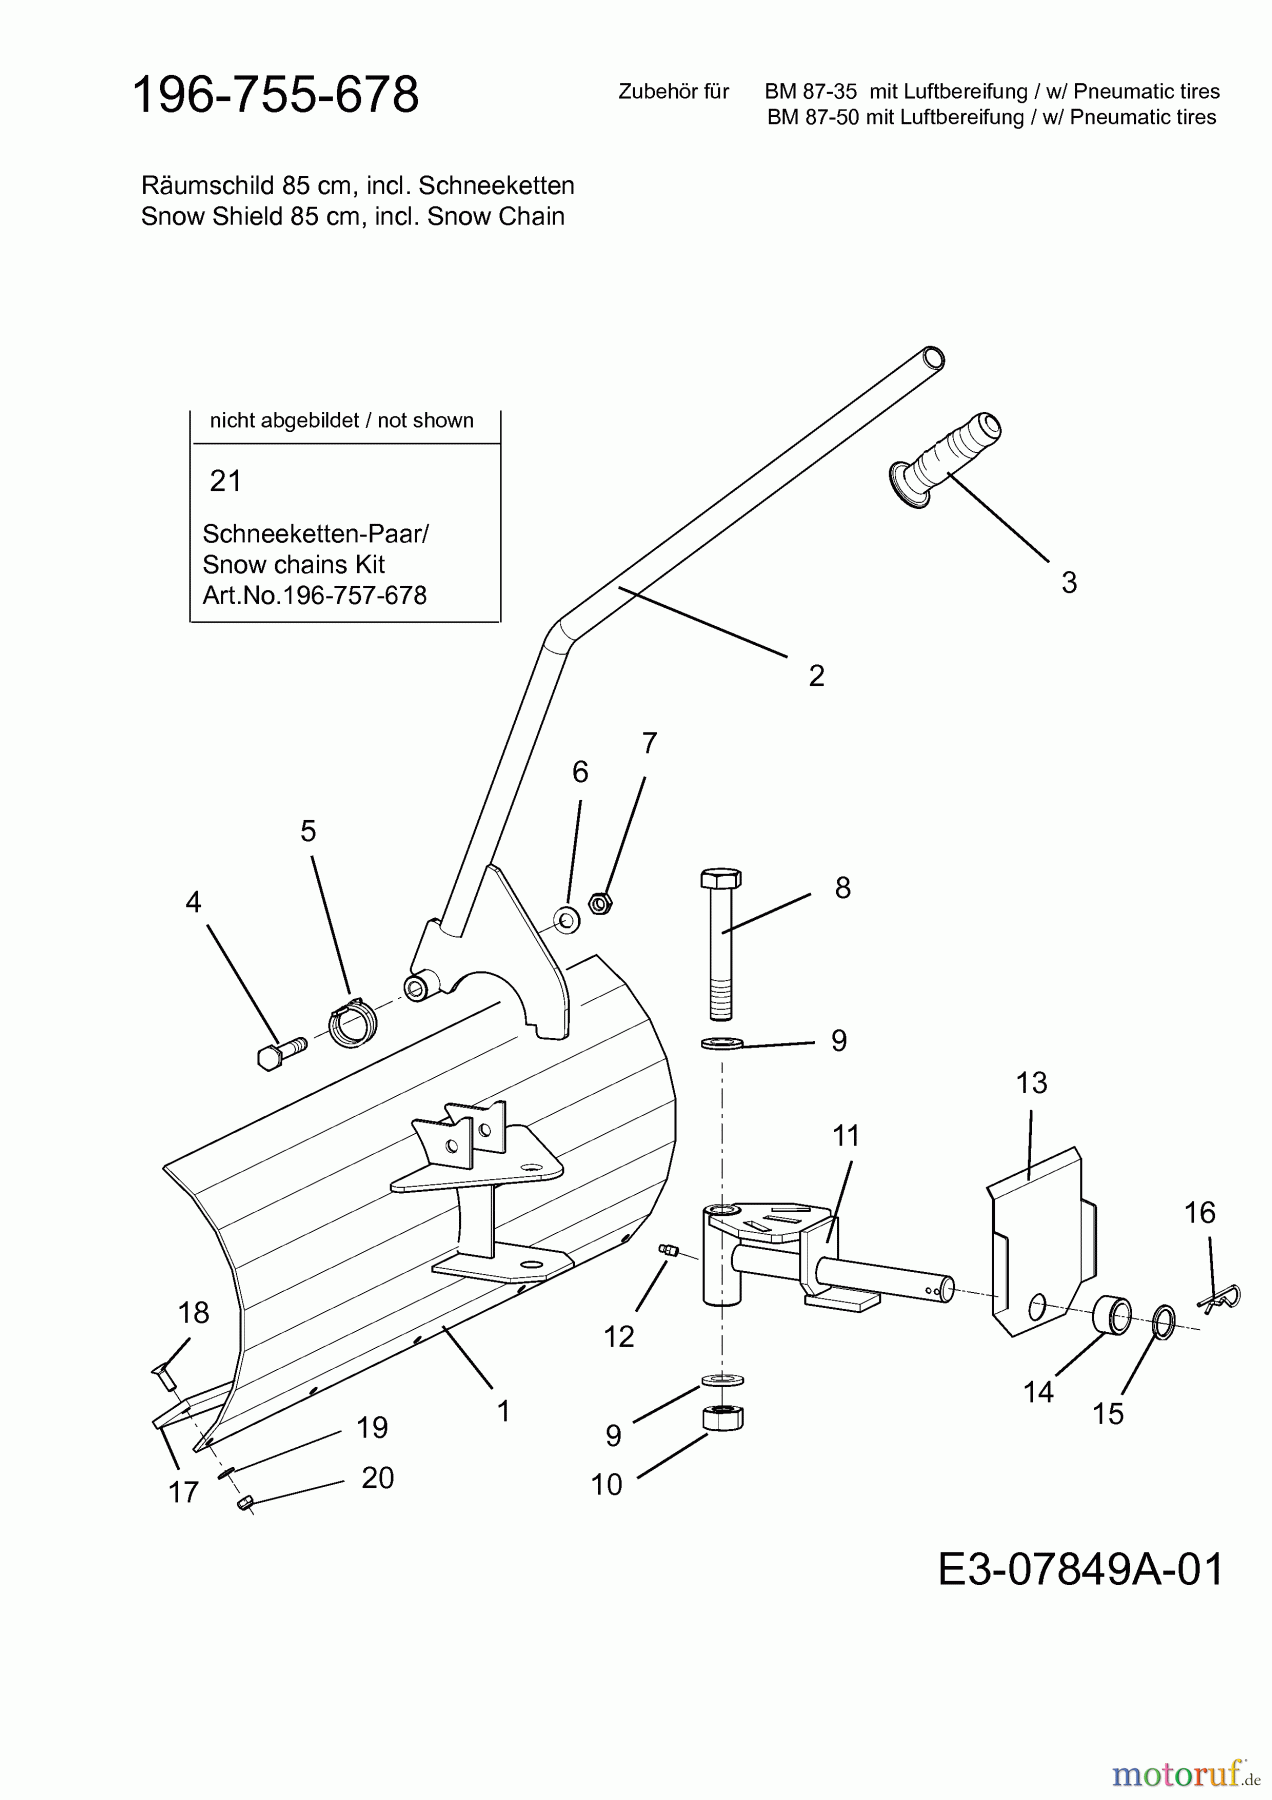  MTD Accessories Accessories cutterbar mower Snow blade for BM 87-35 196-755-678  (2014) Snowblade